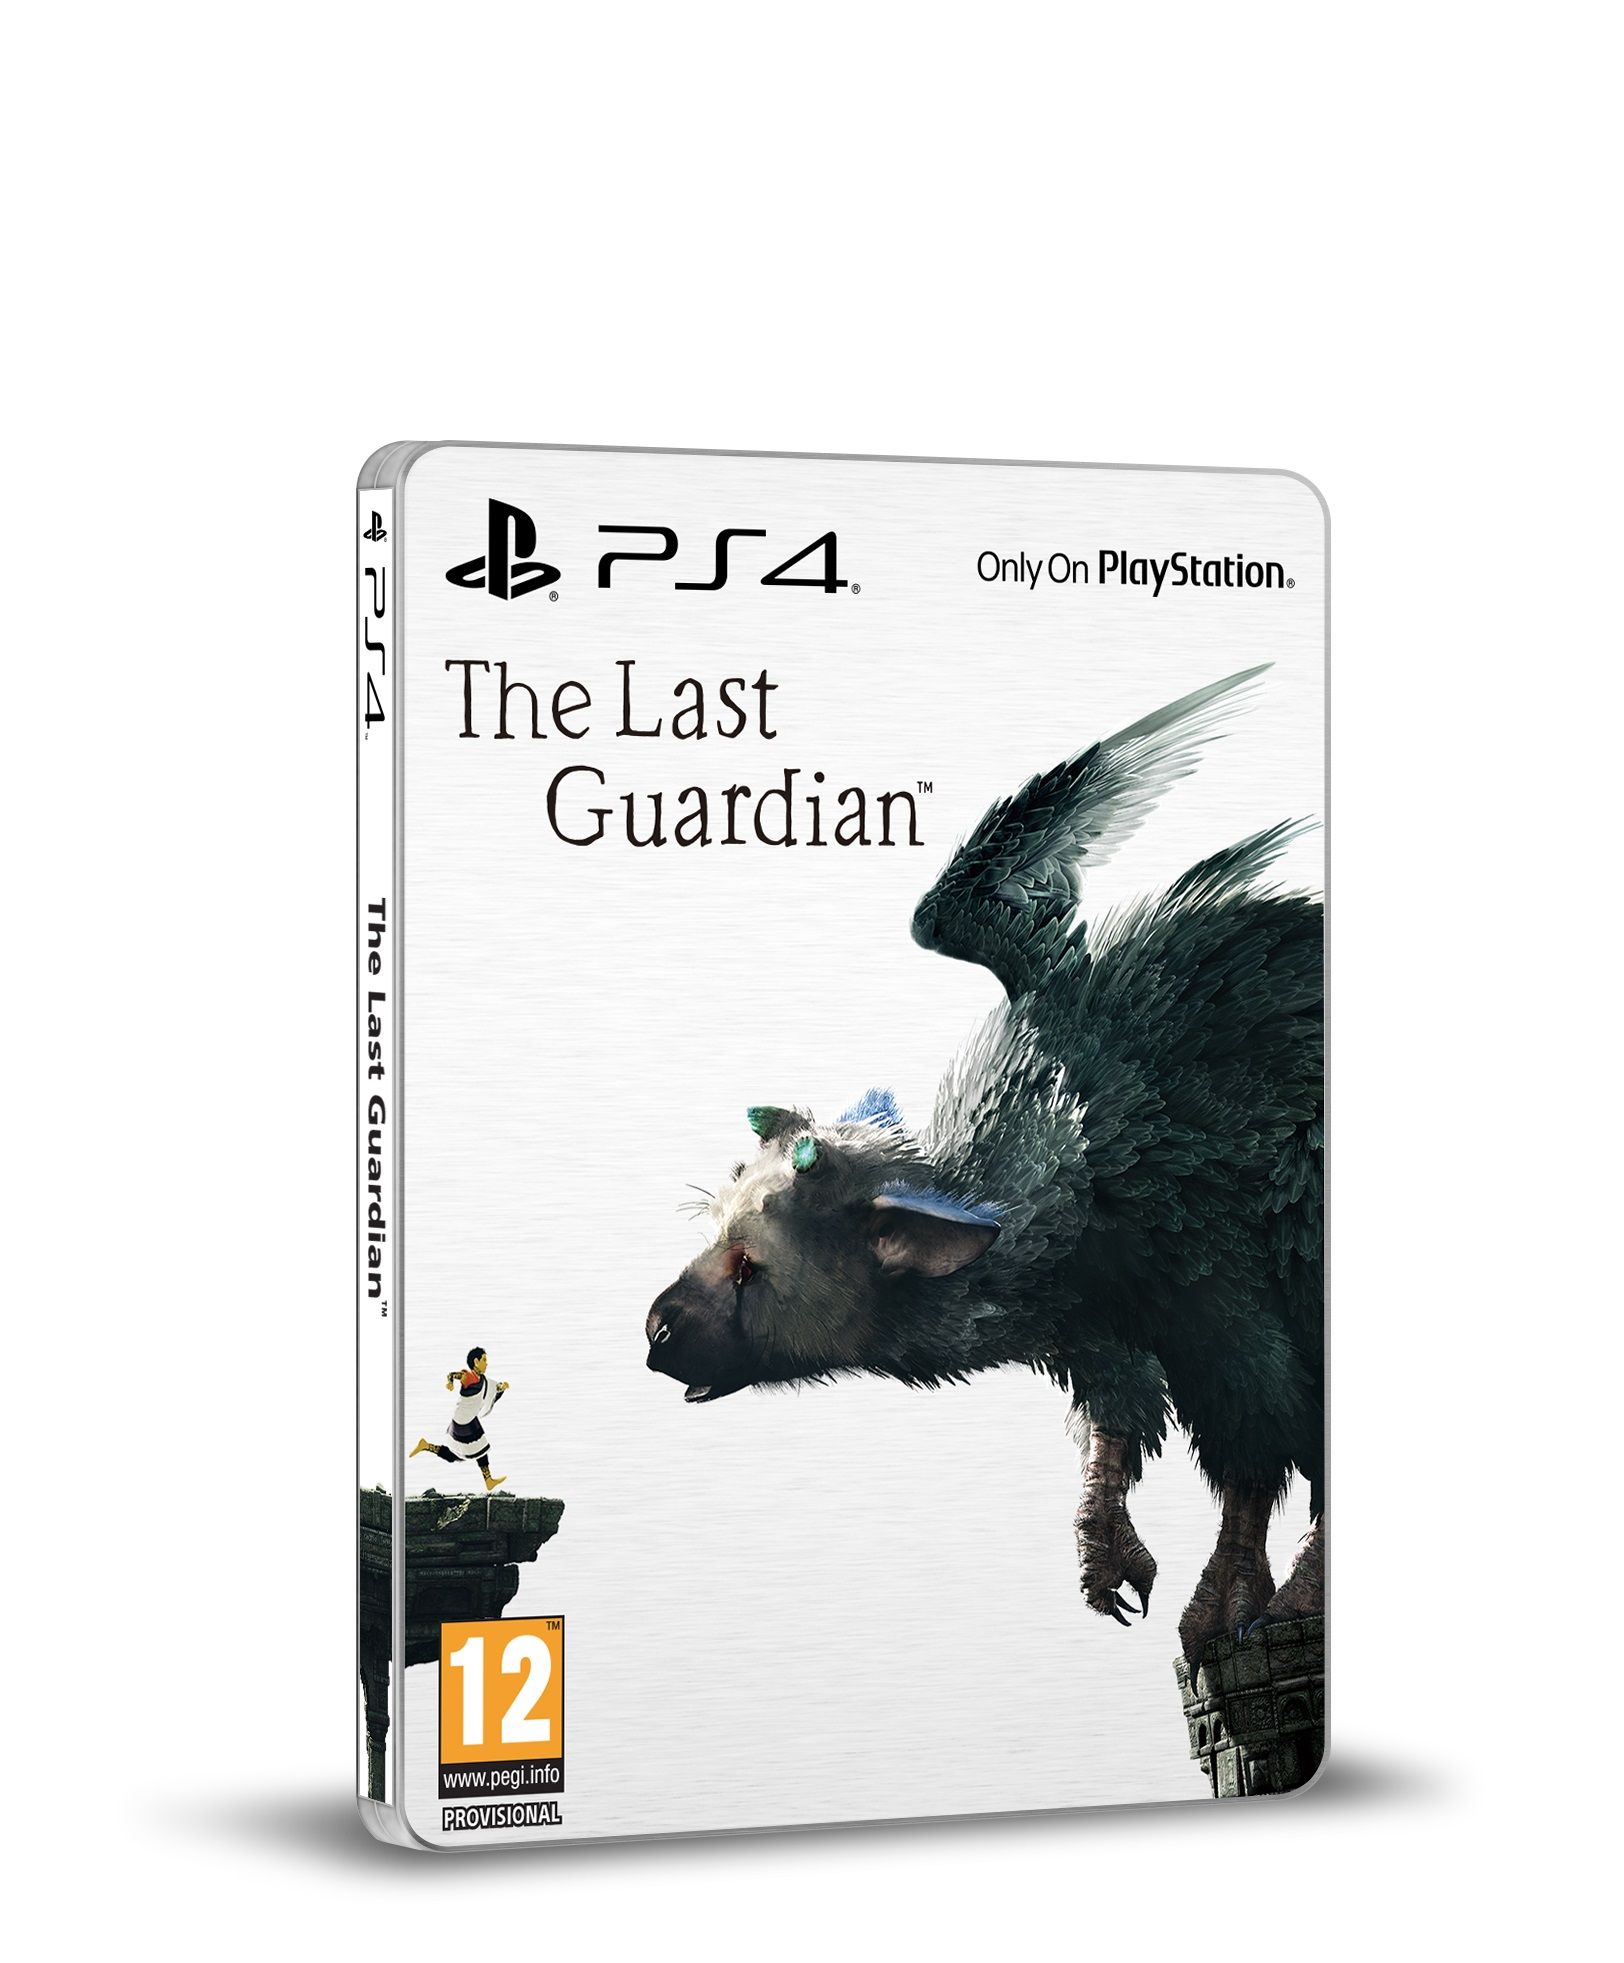 The Last Guardian Special Steelbook Edition